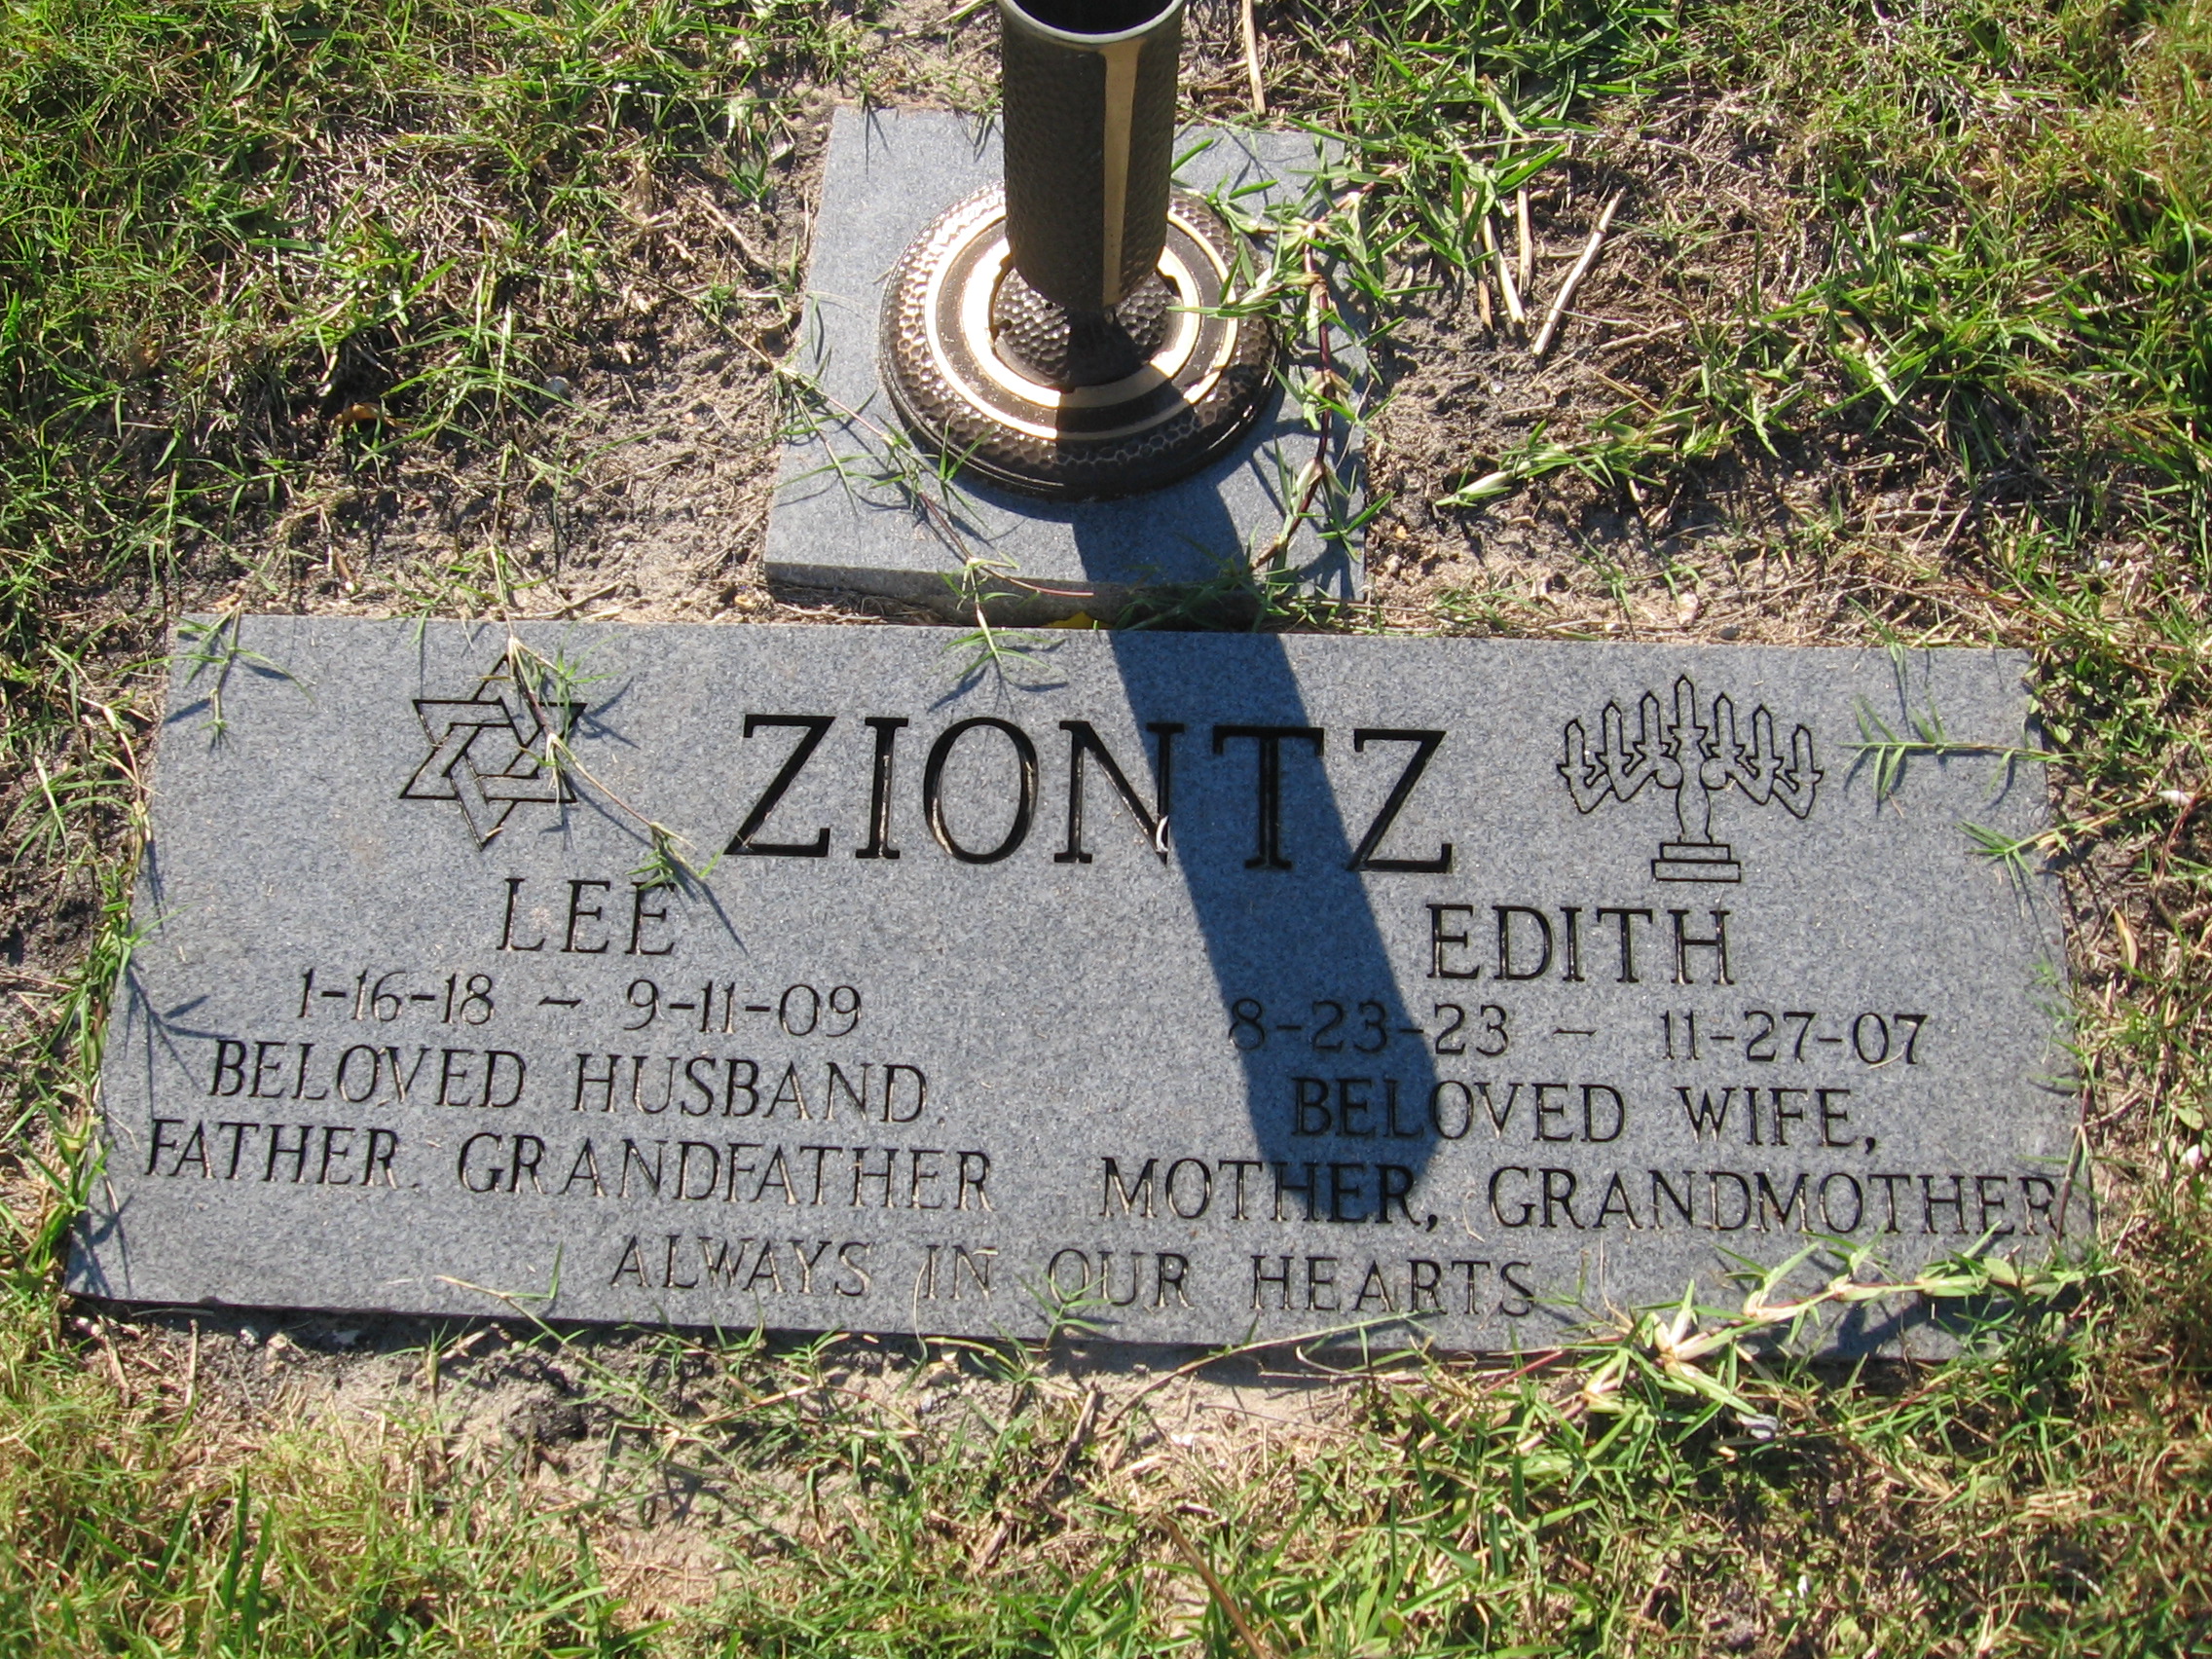 Edith Ziontz